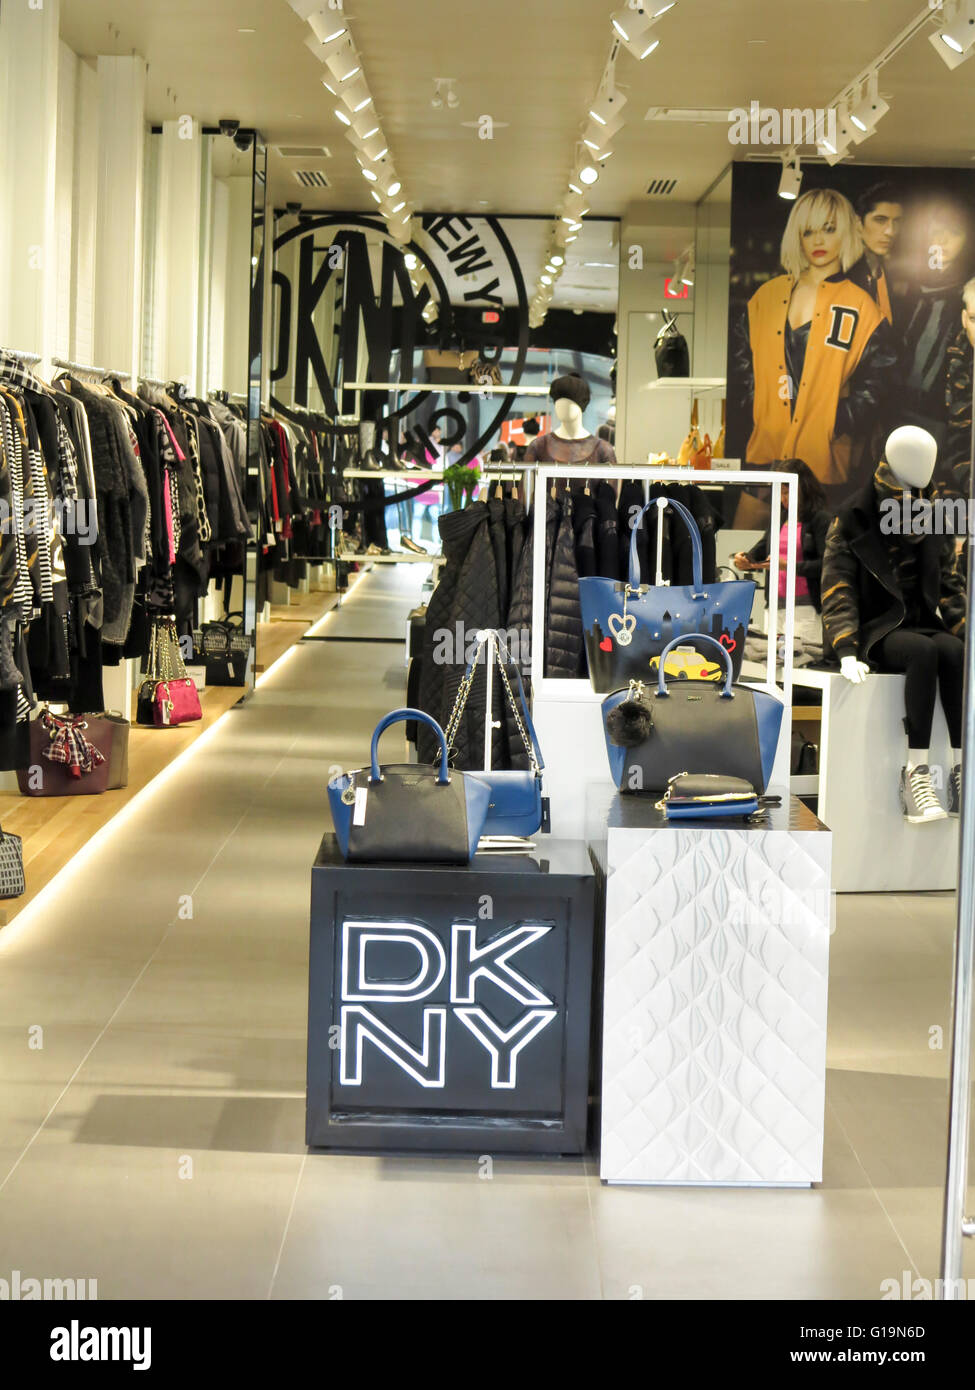 Interior of the DKNY store Stock Photo - Alamy